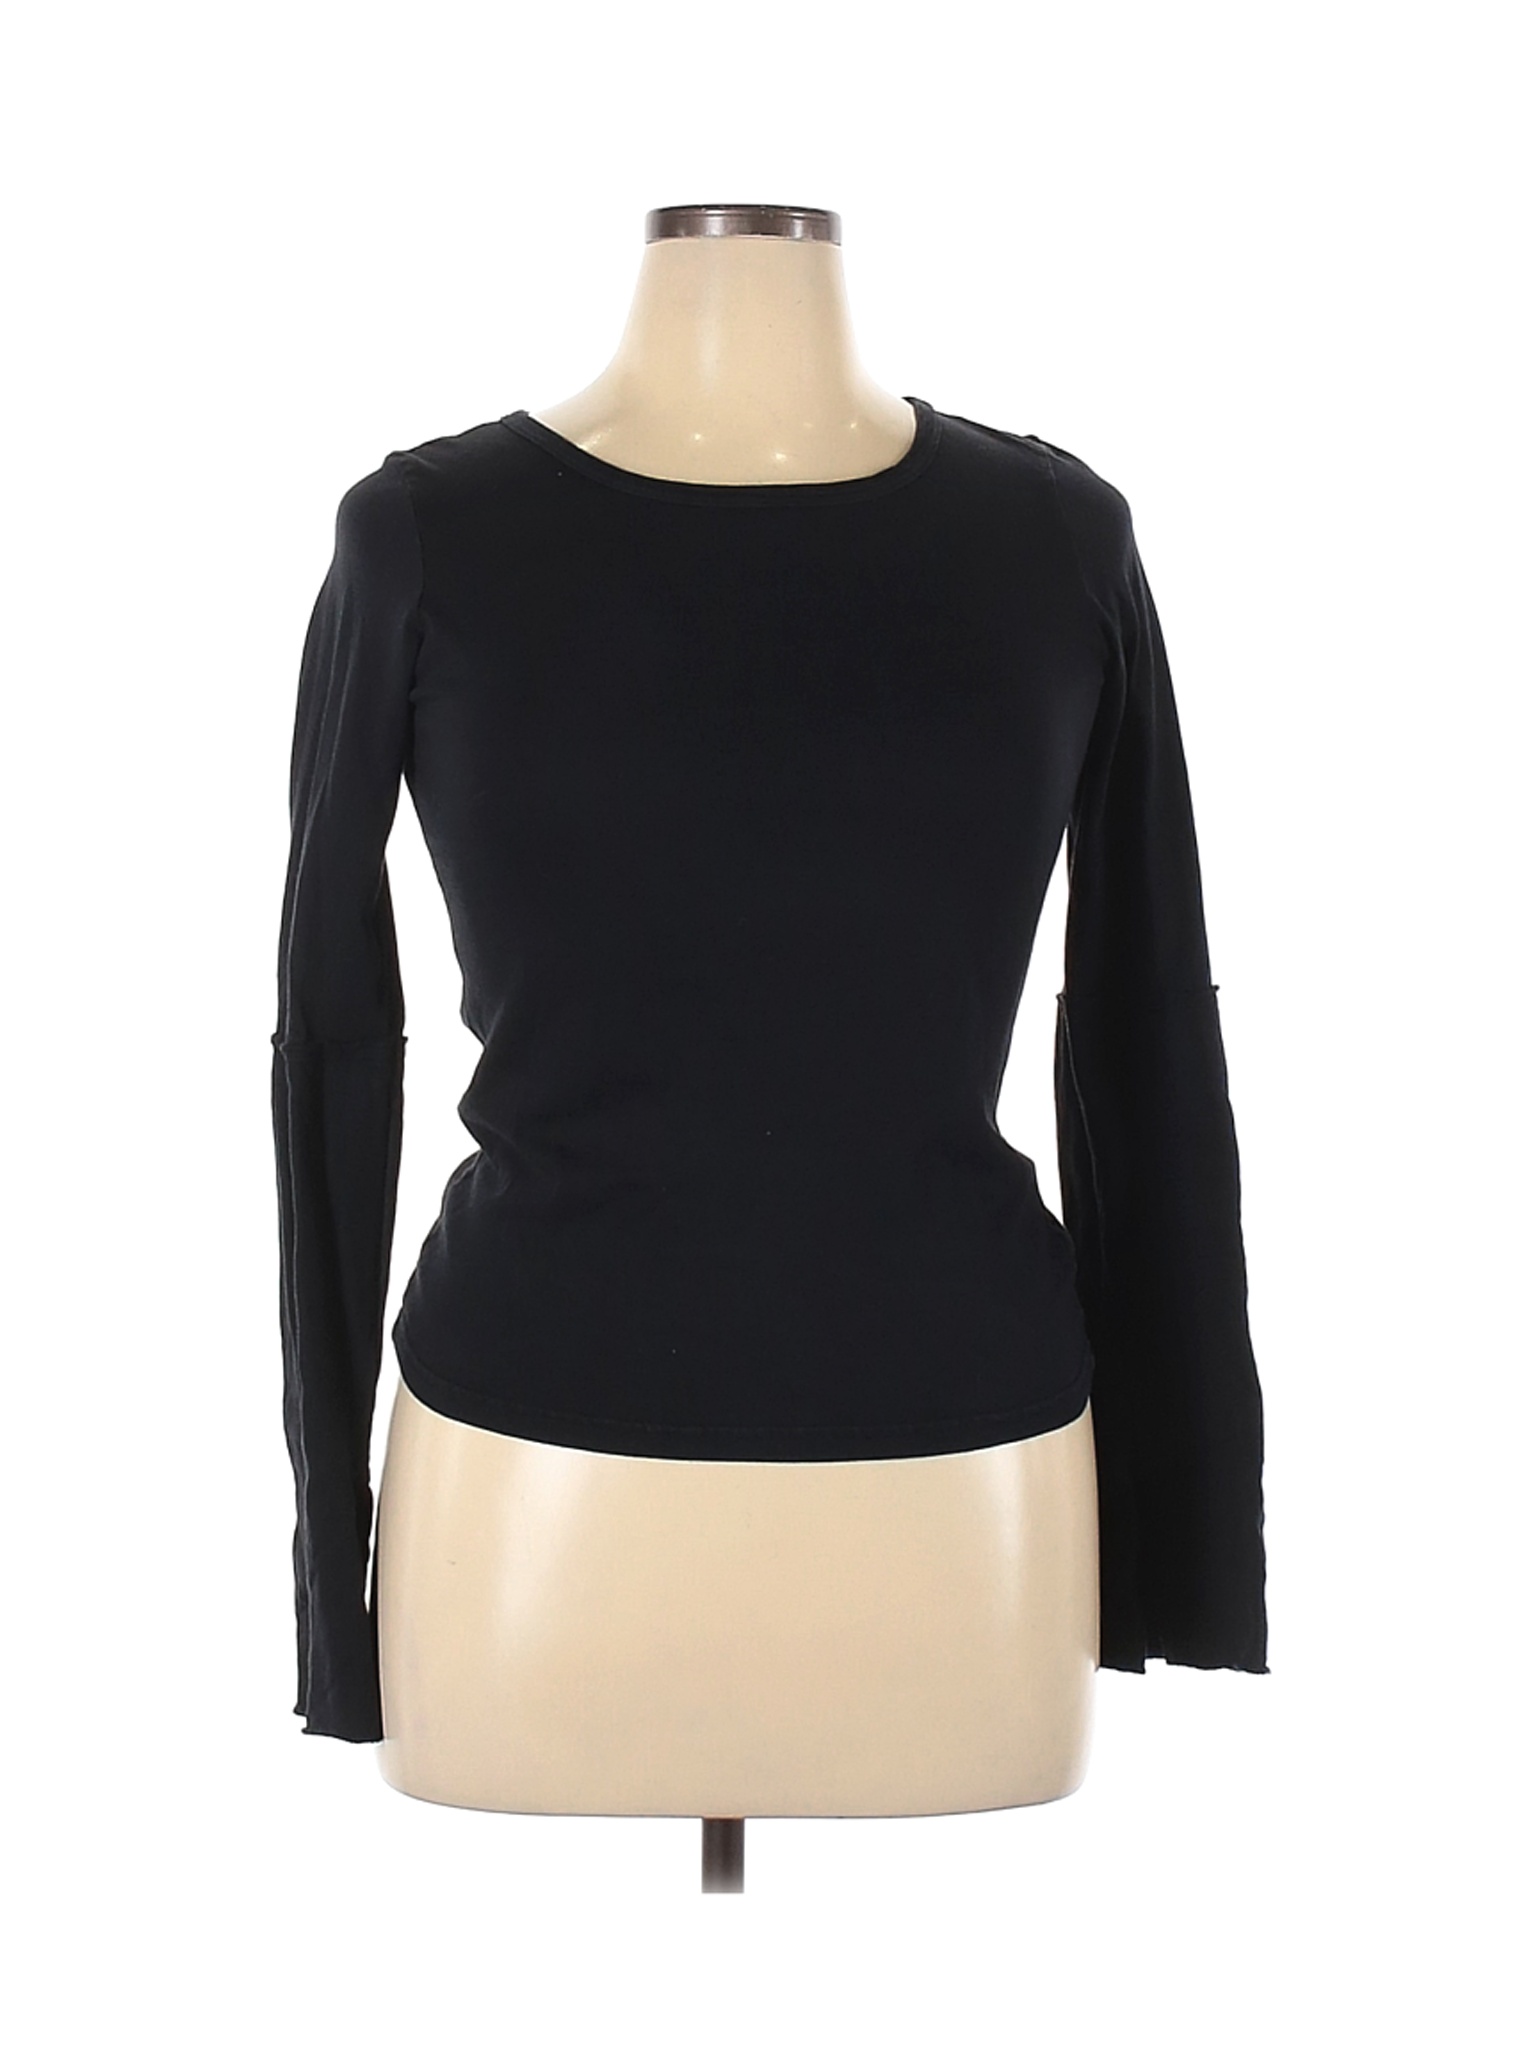 Juicy Couture Women Black Long Sleeve T-Shirt XL | eBay